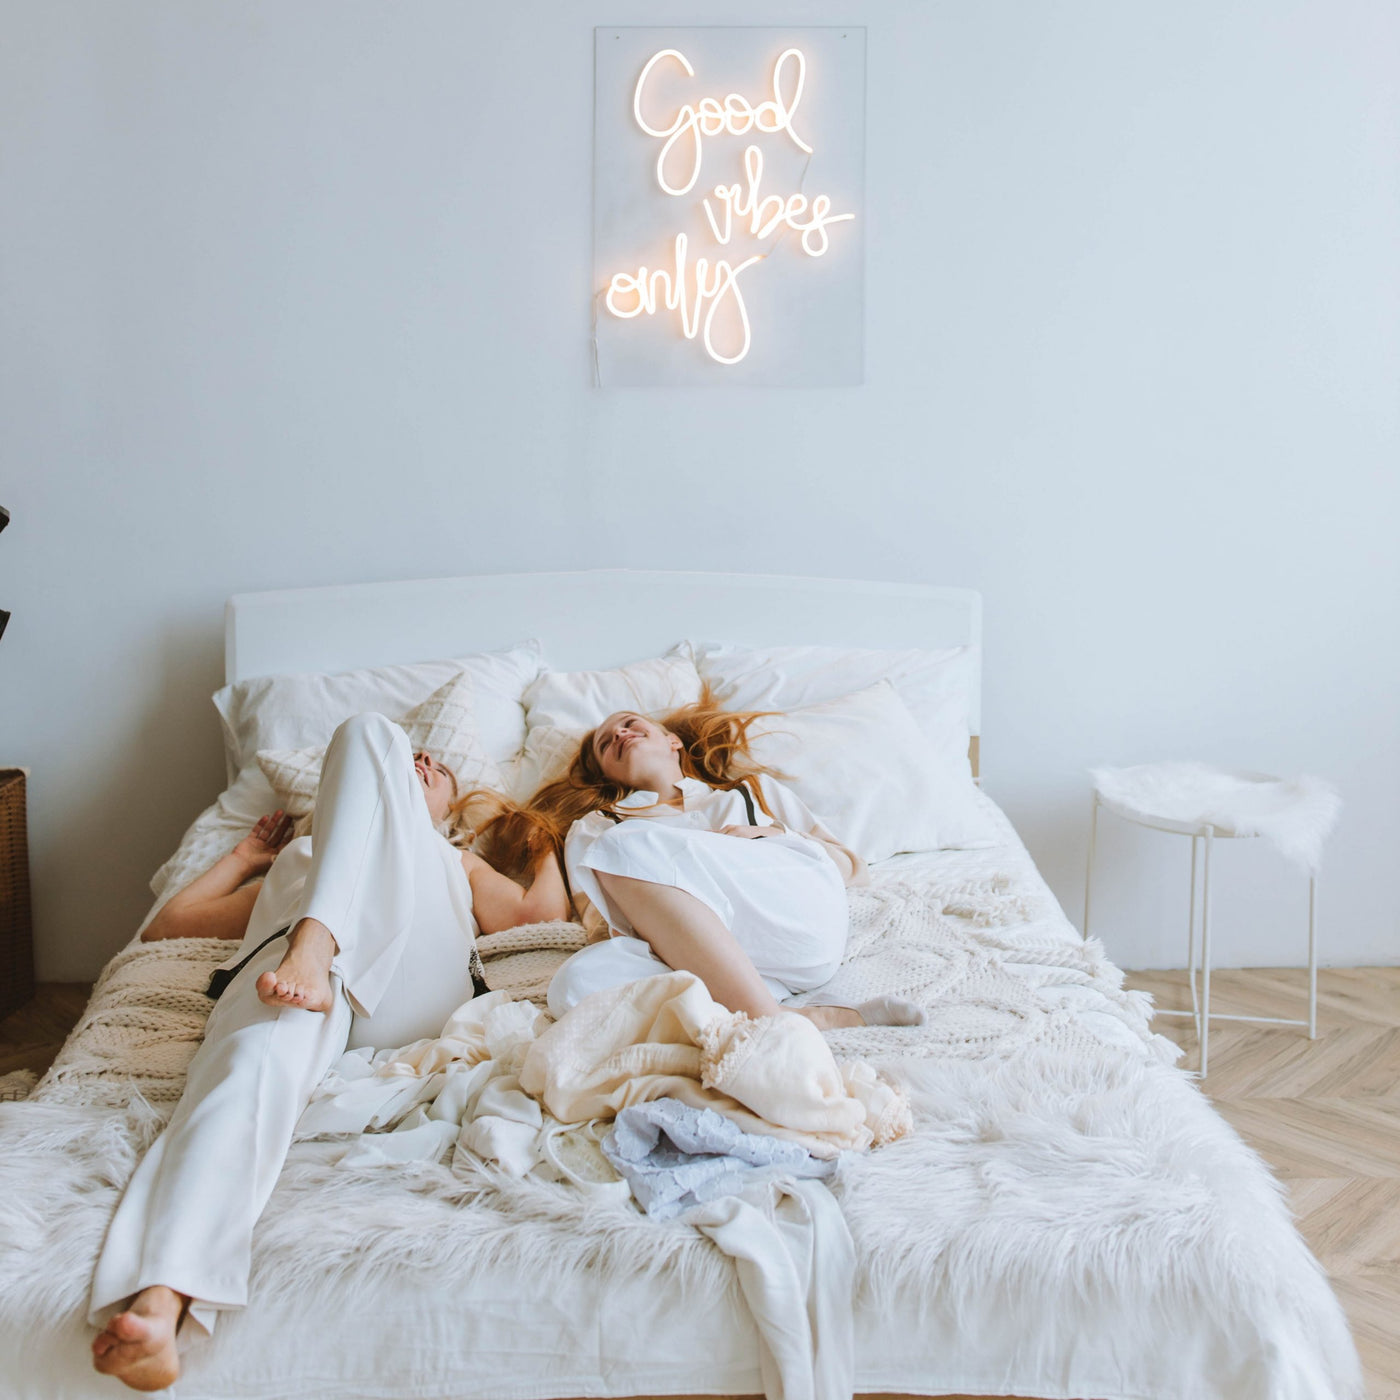 white neon aesthetic sign in bedroom